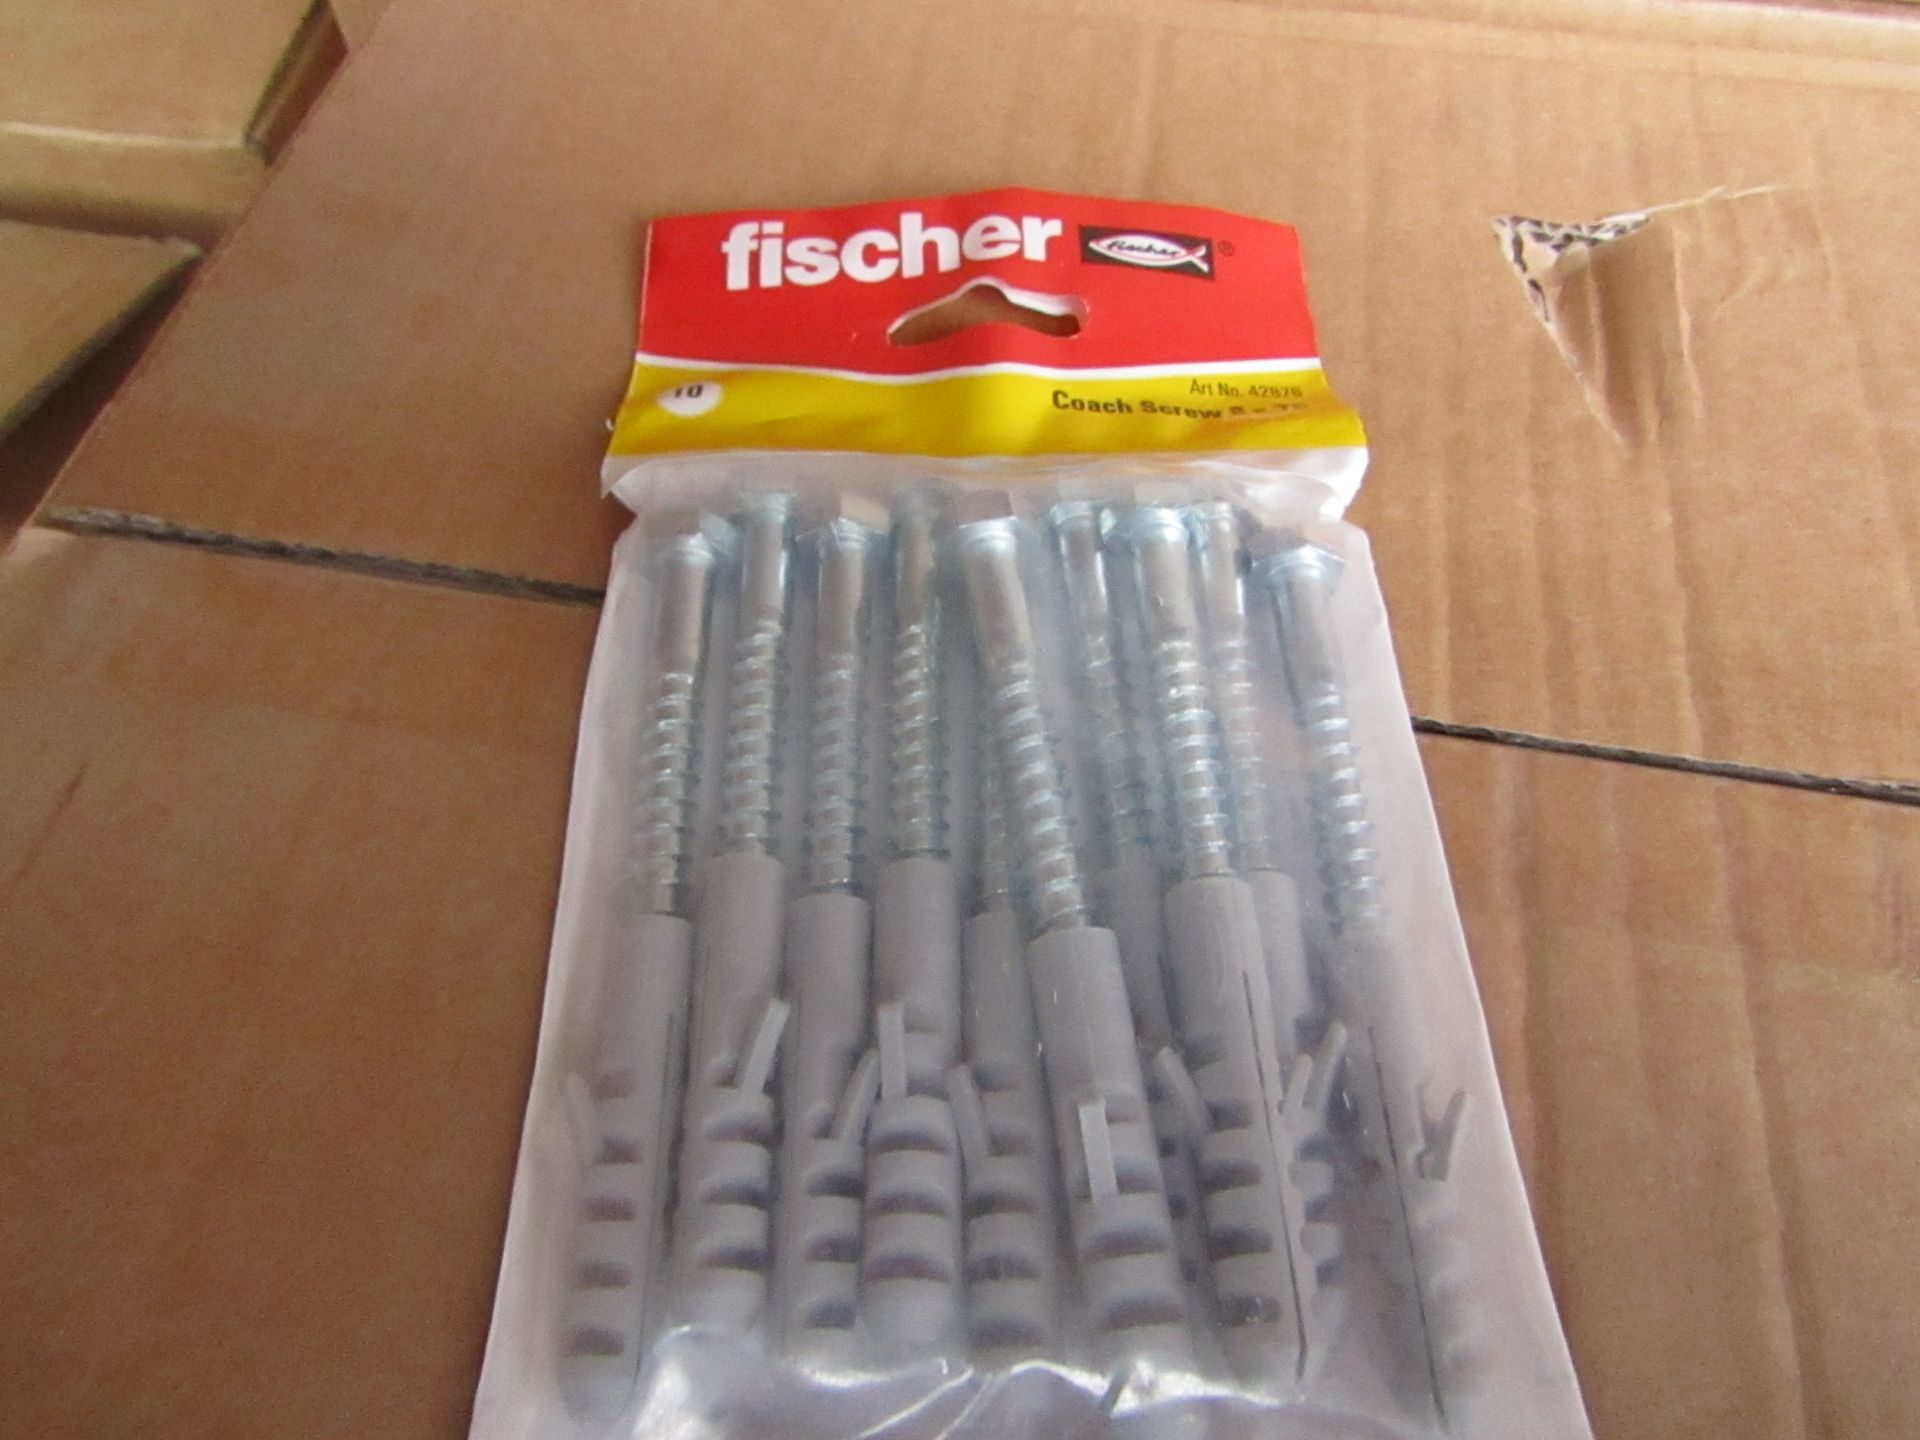 20x Fischer - Coach Screw 8 x 70 (Packs of 10) - New & Packaged.